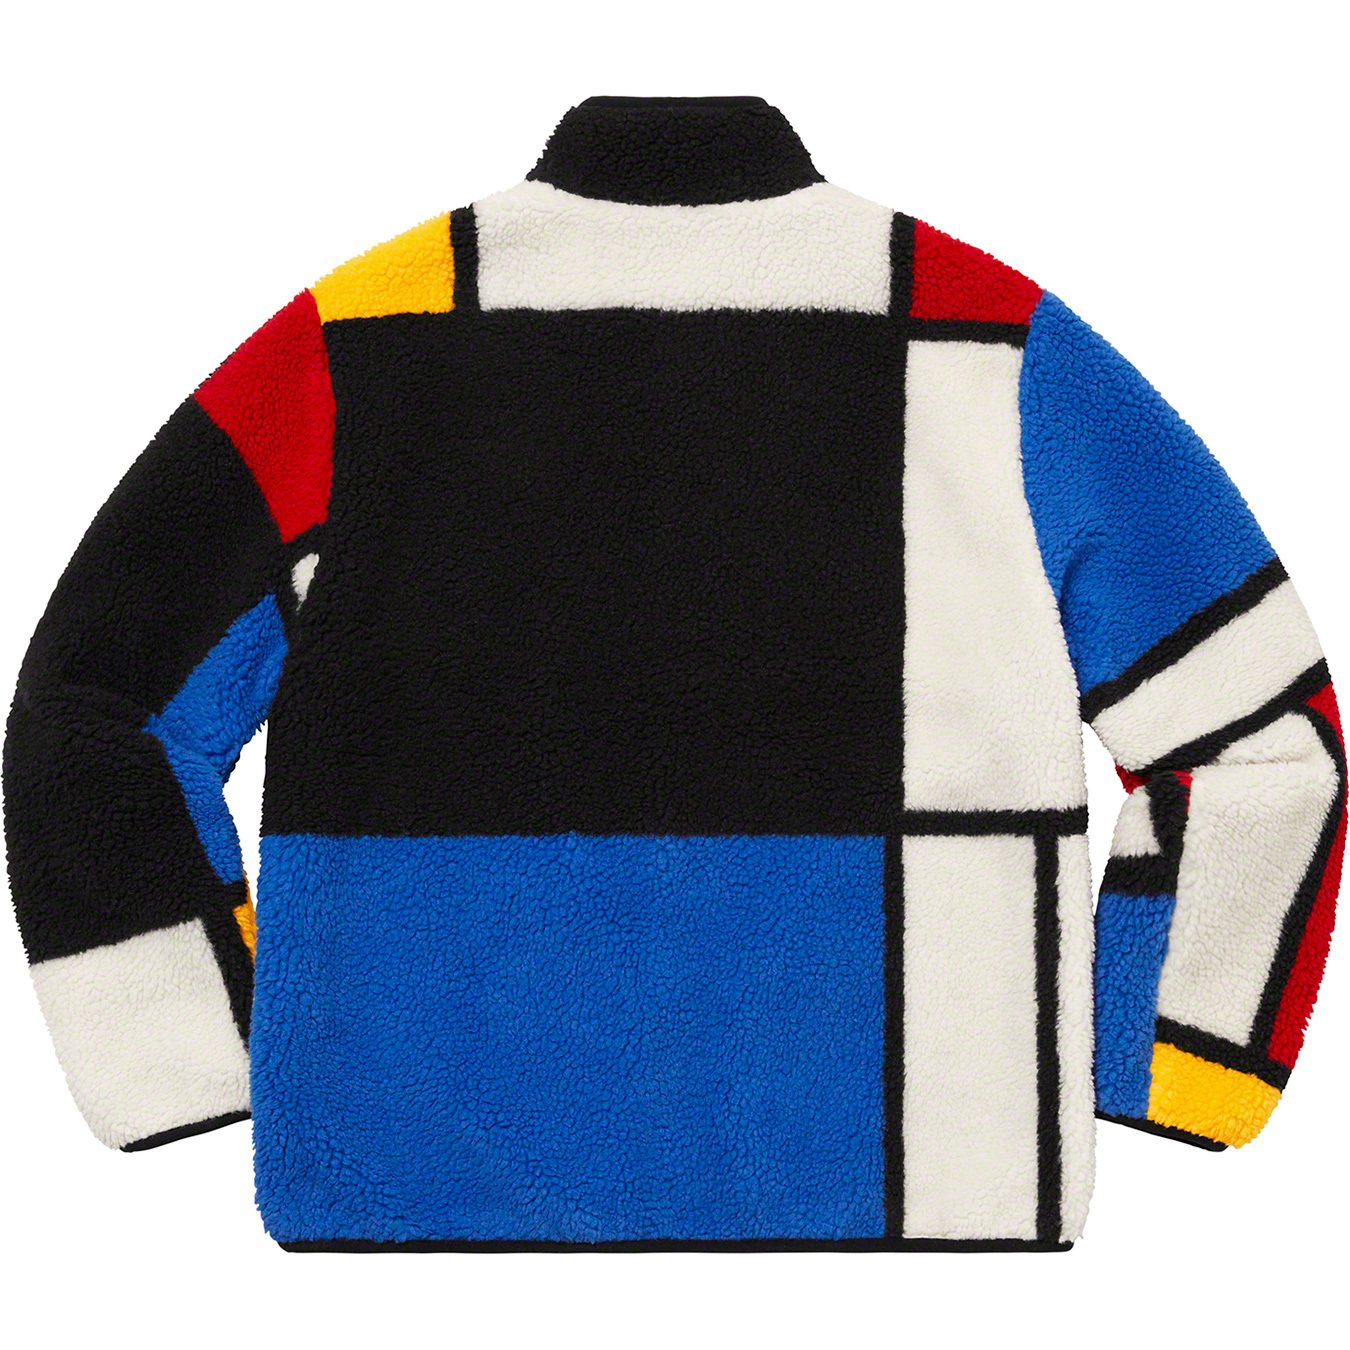 Supreme Reversible Colorblocked Fleece Jacket